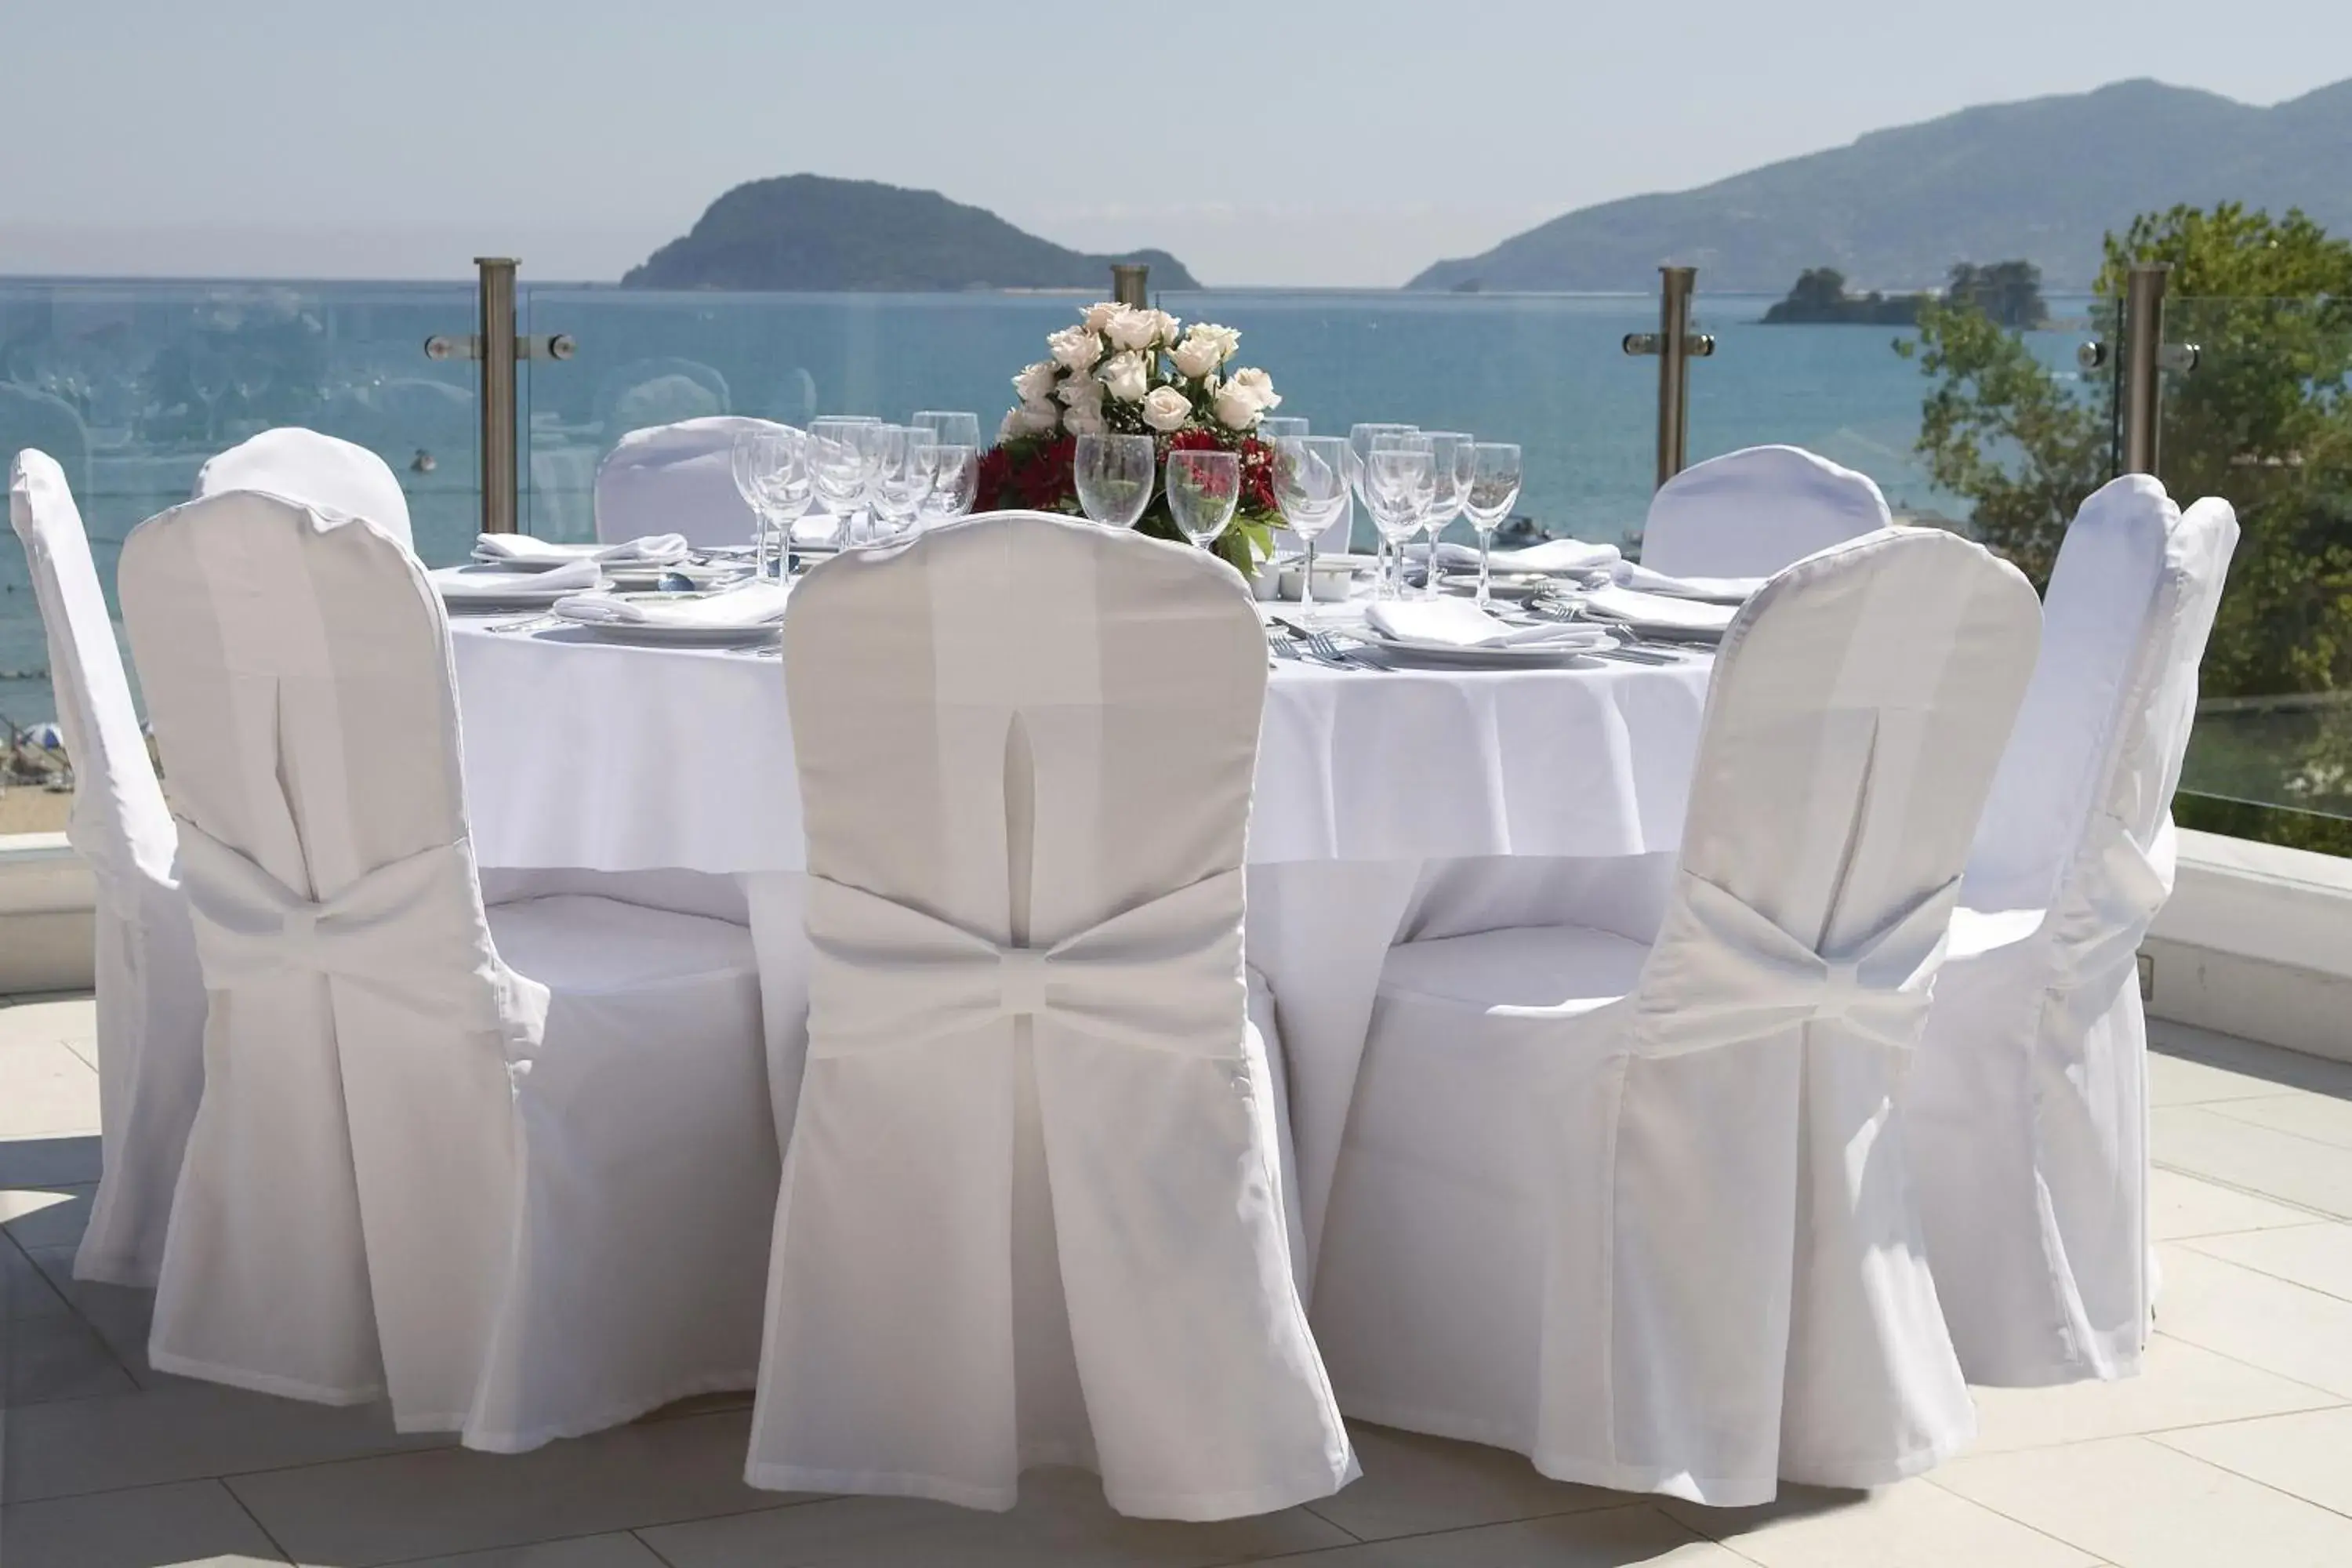 Banquet/Function facilities, Banquet Facilities in Galaxy Beach Resort, BW Premier Collection